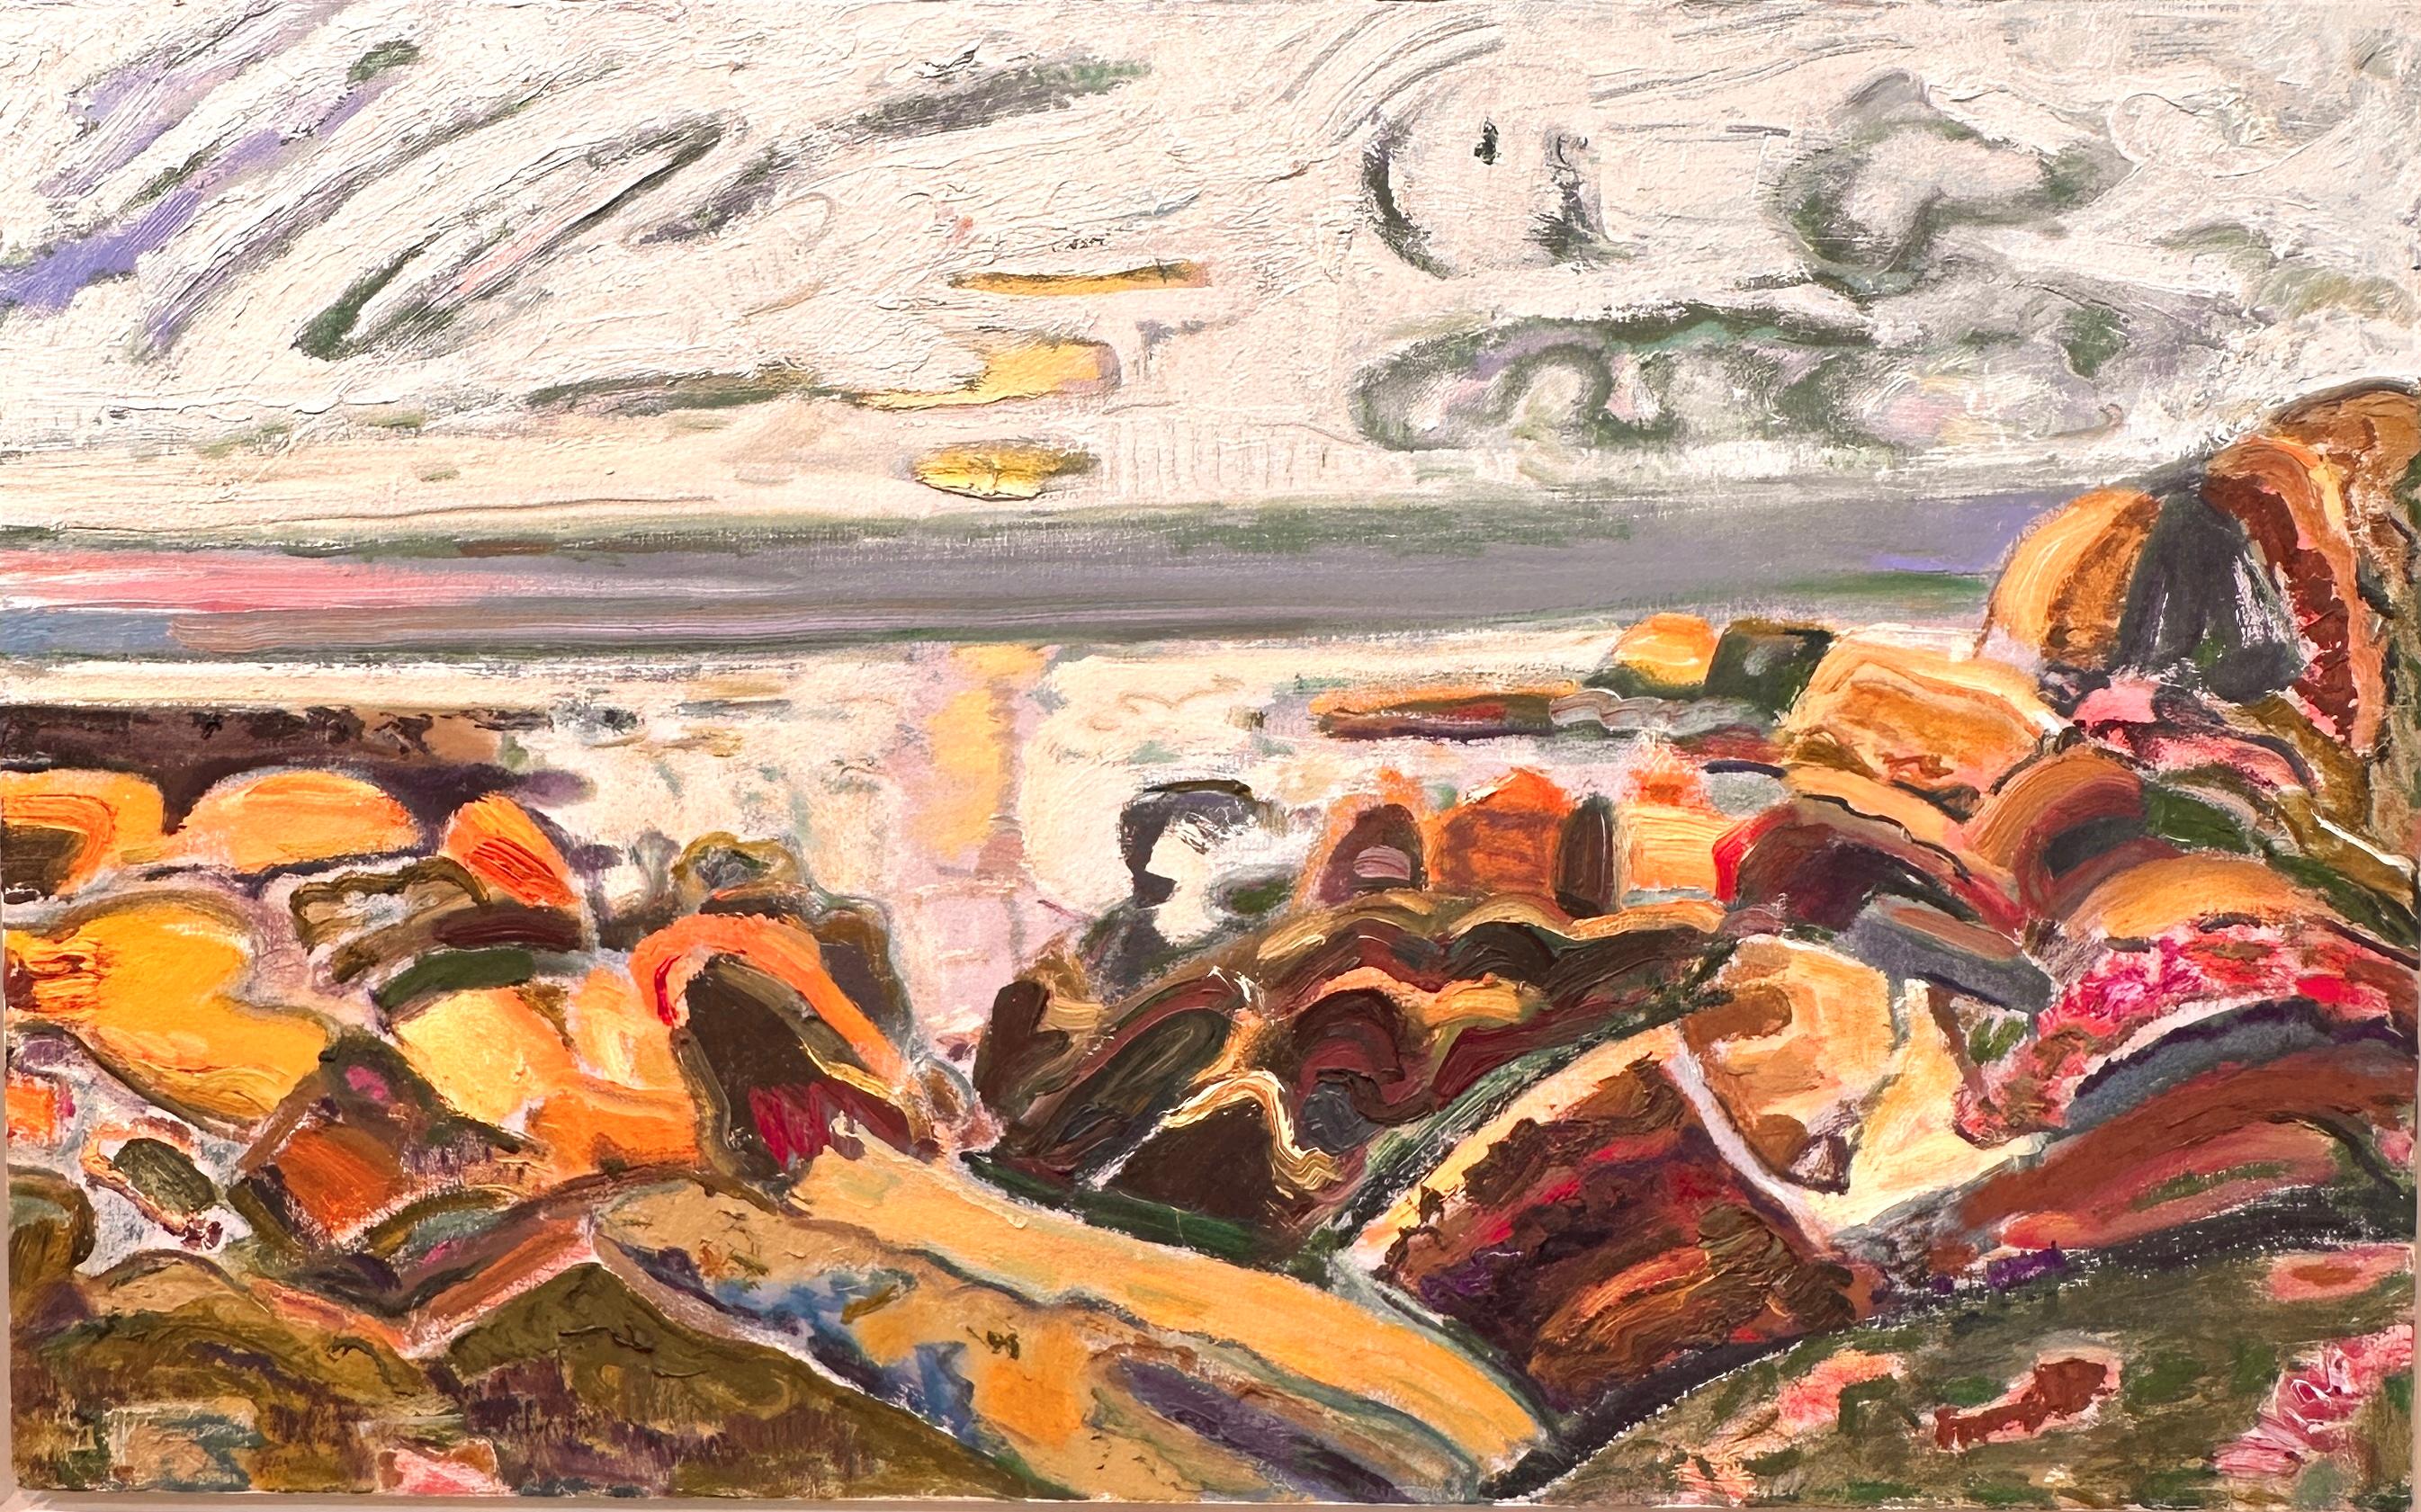 Bernard Chaet Abstract Painting - "Broken Sky" - Boston Expressionist Abstract Seascape. Gloucester Rocks & Ocean